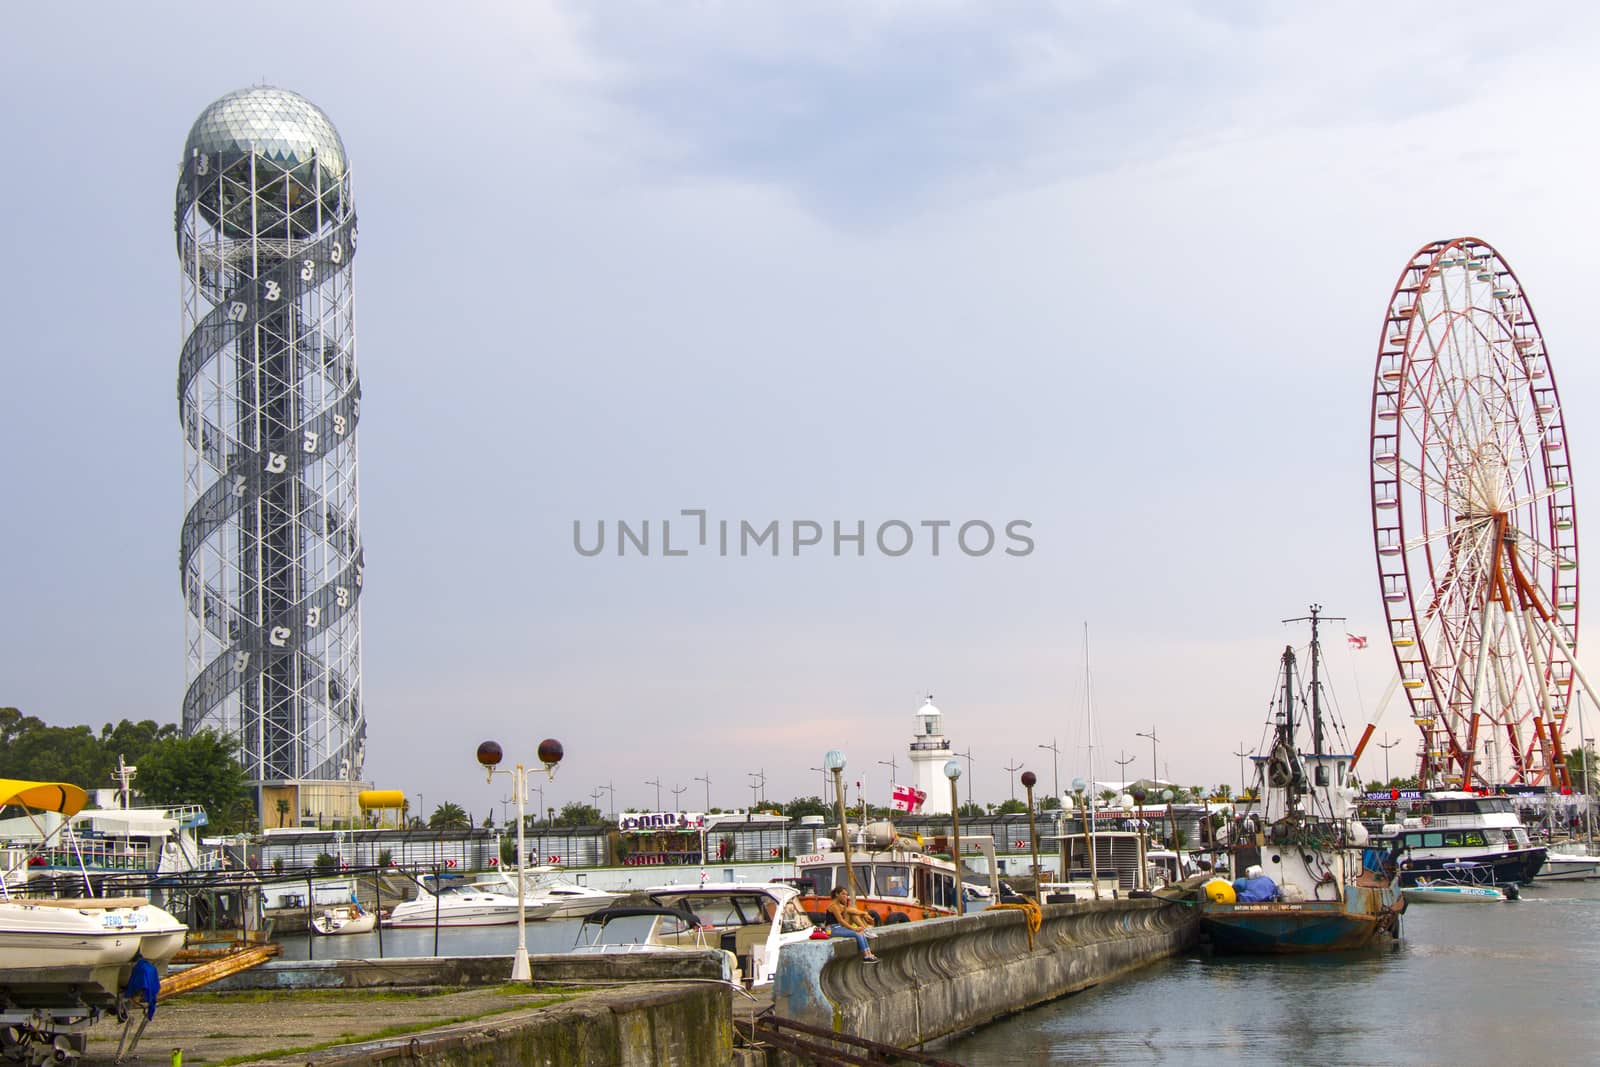 Batumi harbor and port, Alphabet tower, boats and ships. City landscape of Batumi. by Taidundua